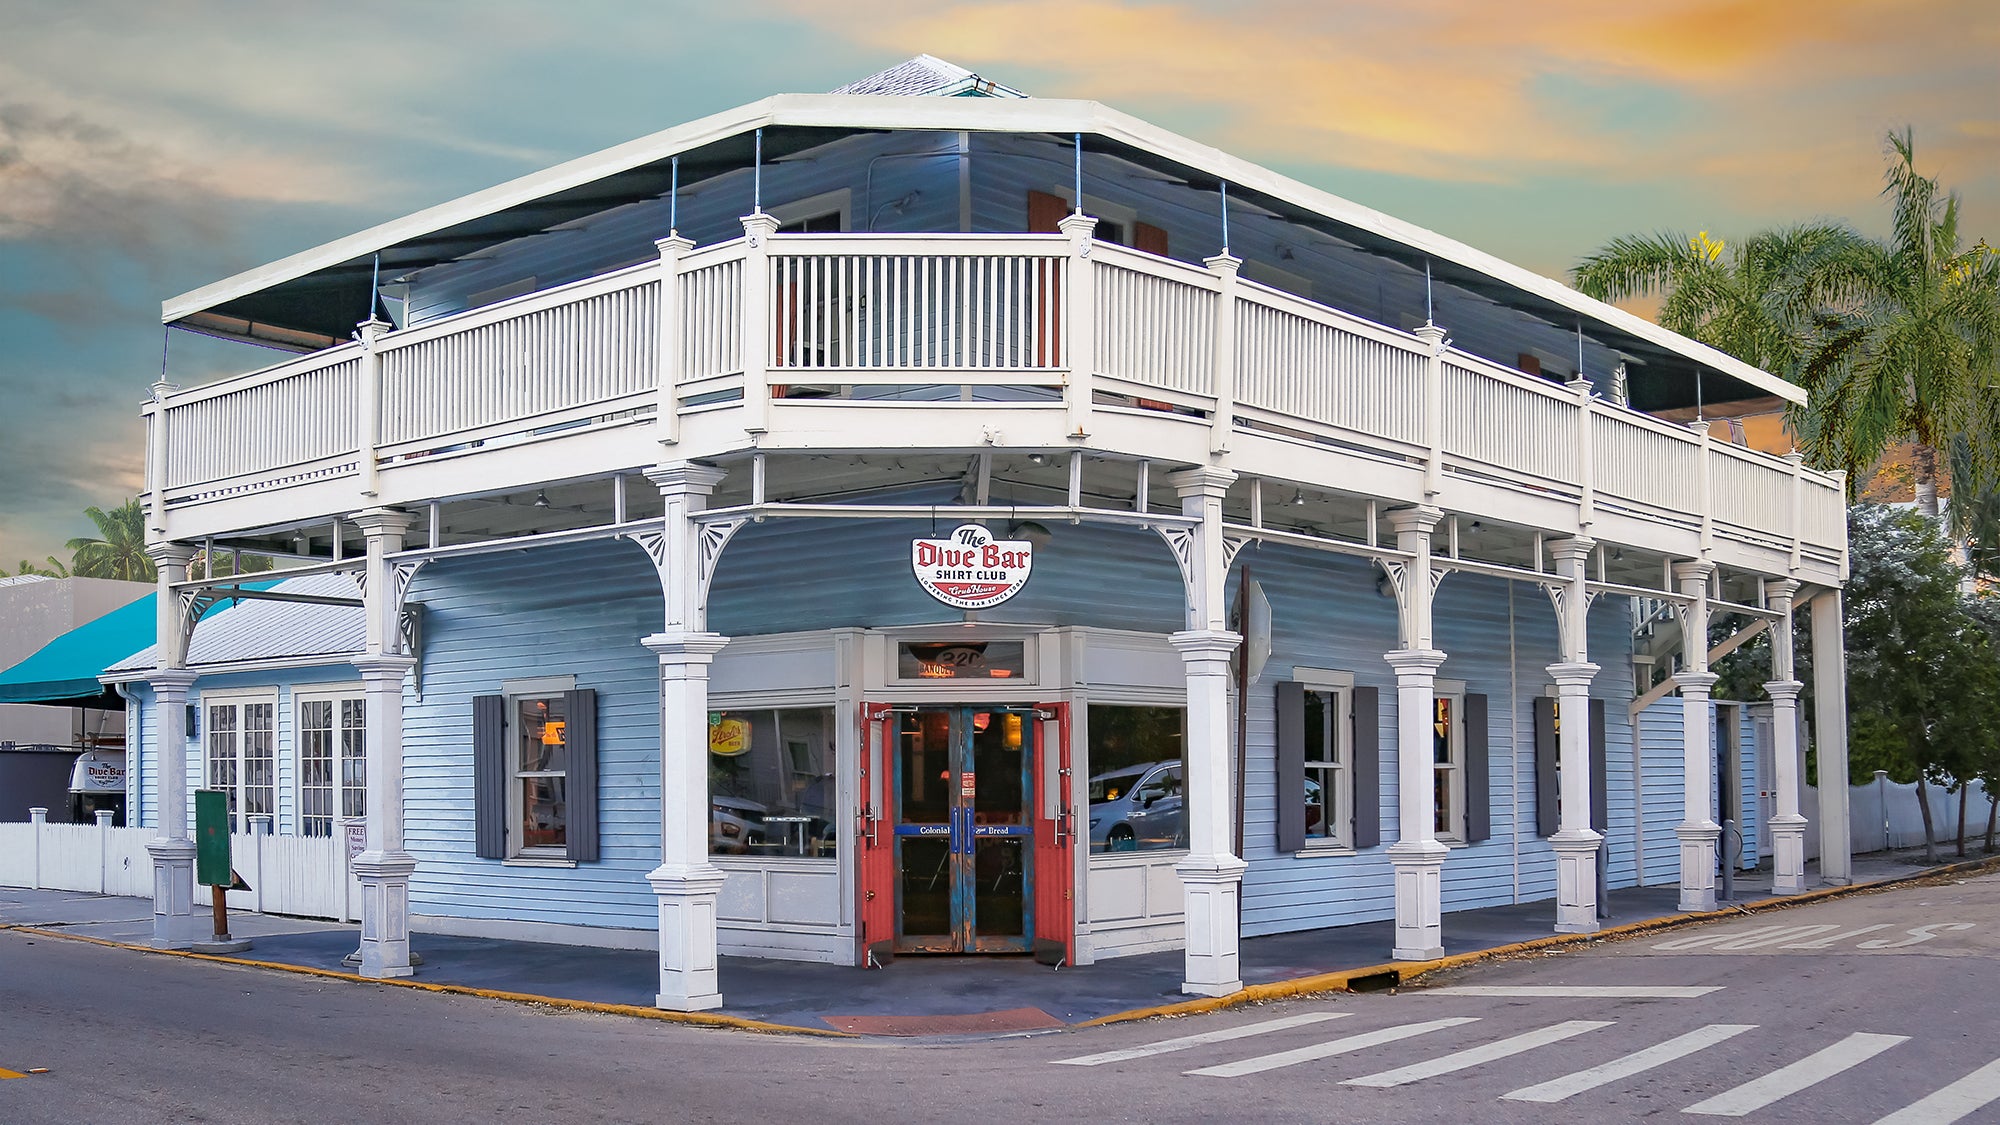 The Dive Bar Shirt Club bar in Key West, Florida